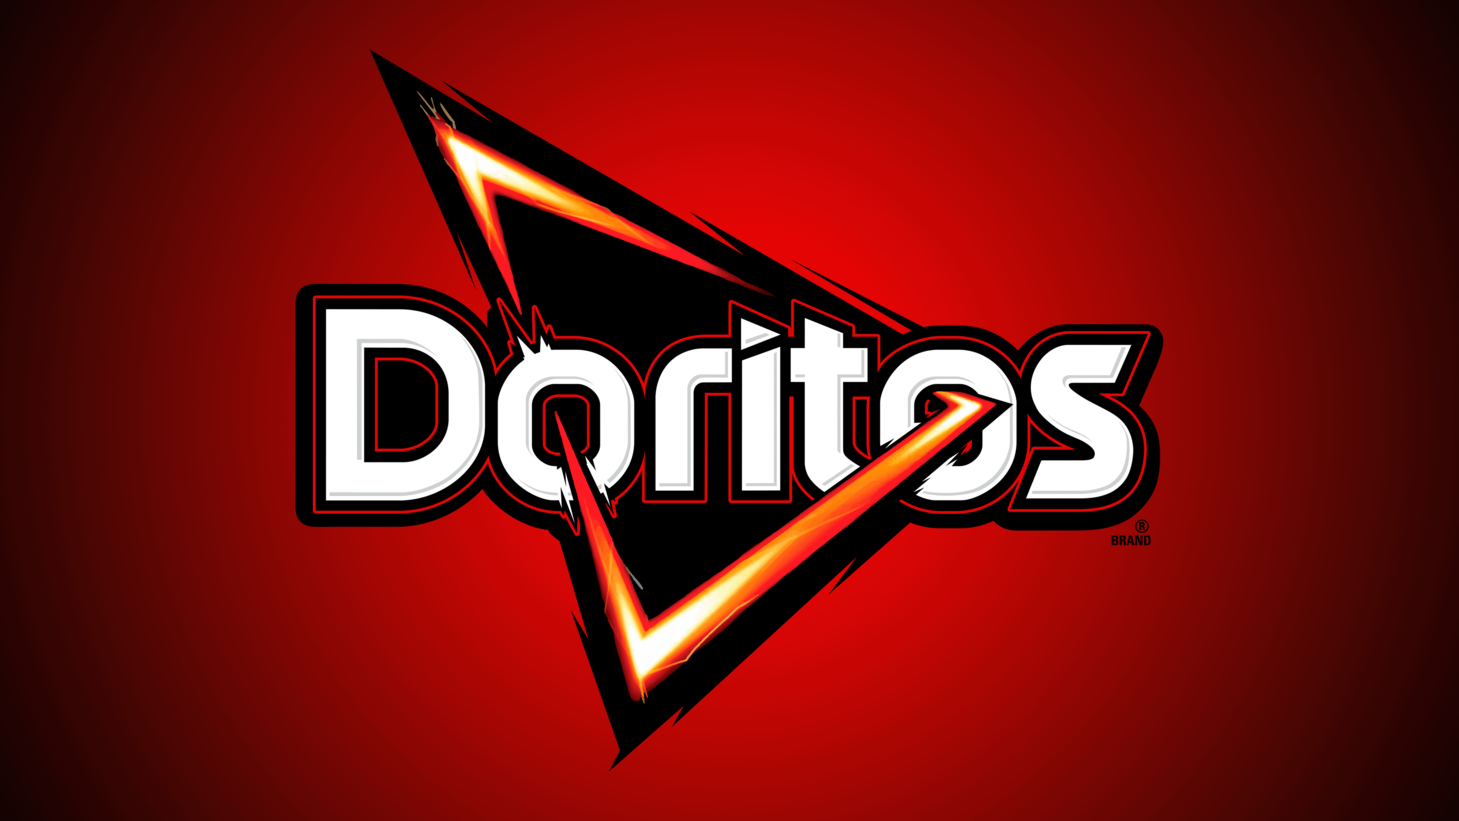 Doritos symbol